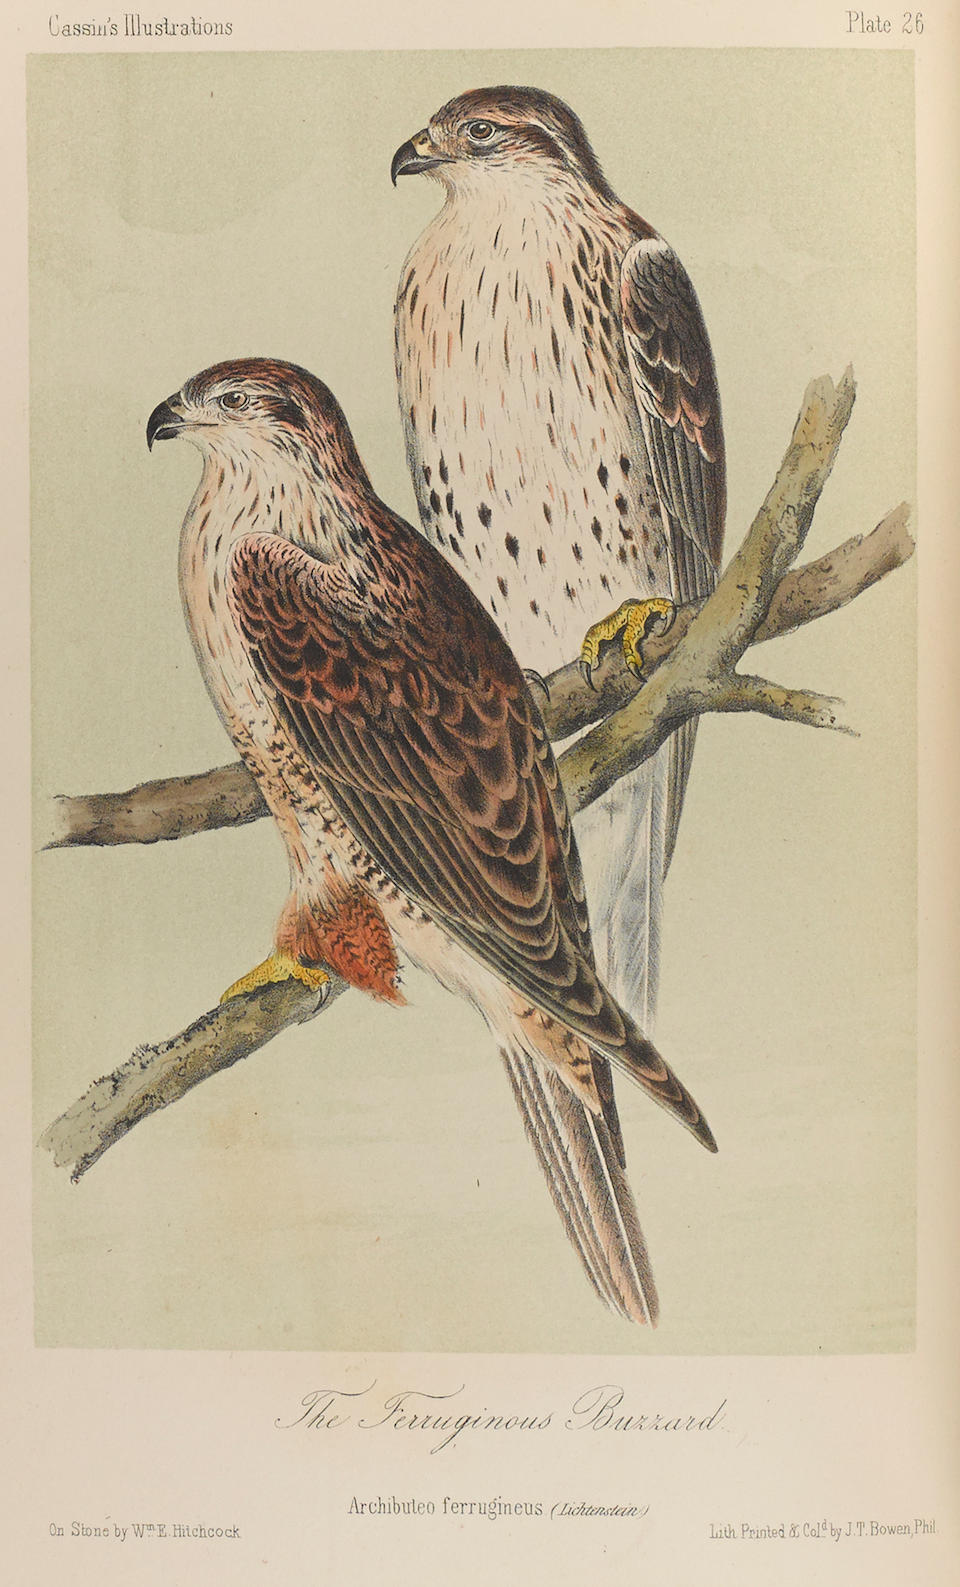 CASSIN, JOHN. 1813-1869. Illustrations of the Birds of California, Texas, Oregon, British and Russian America. Philadelphia: J.B. Lippincott & Co., 1856.